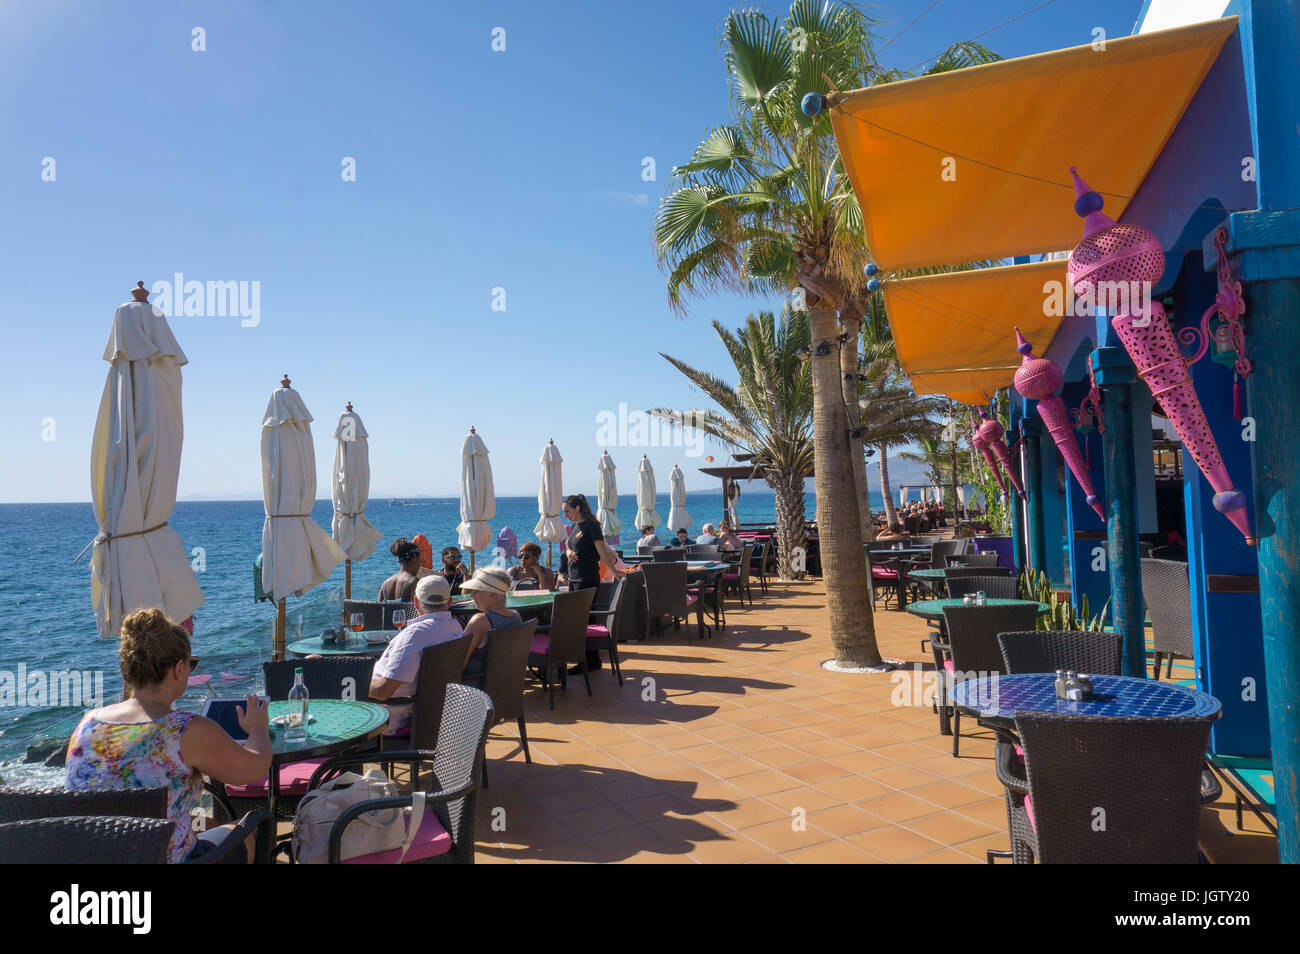 Beach cafe at Puerto del Carmen, Lanzarote island, Canary islands, Spain, Europe Stock Photo